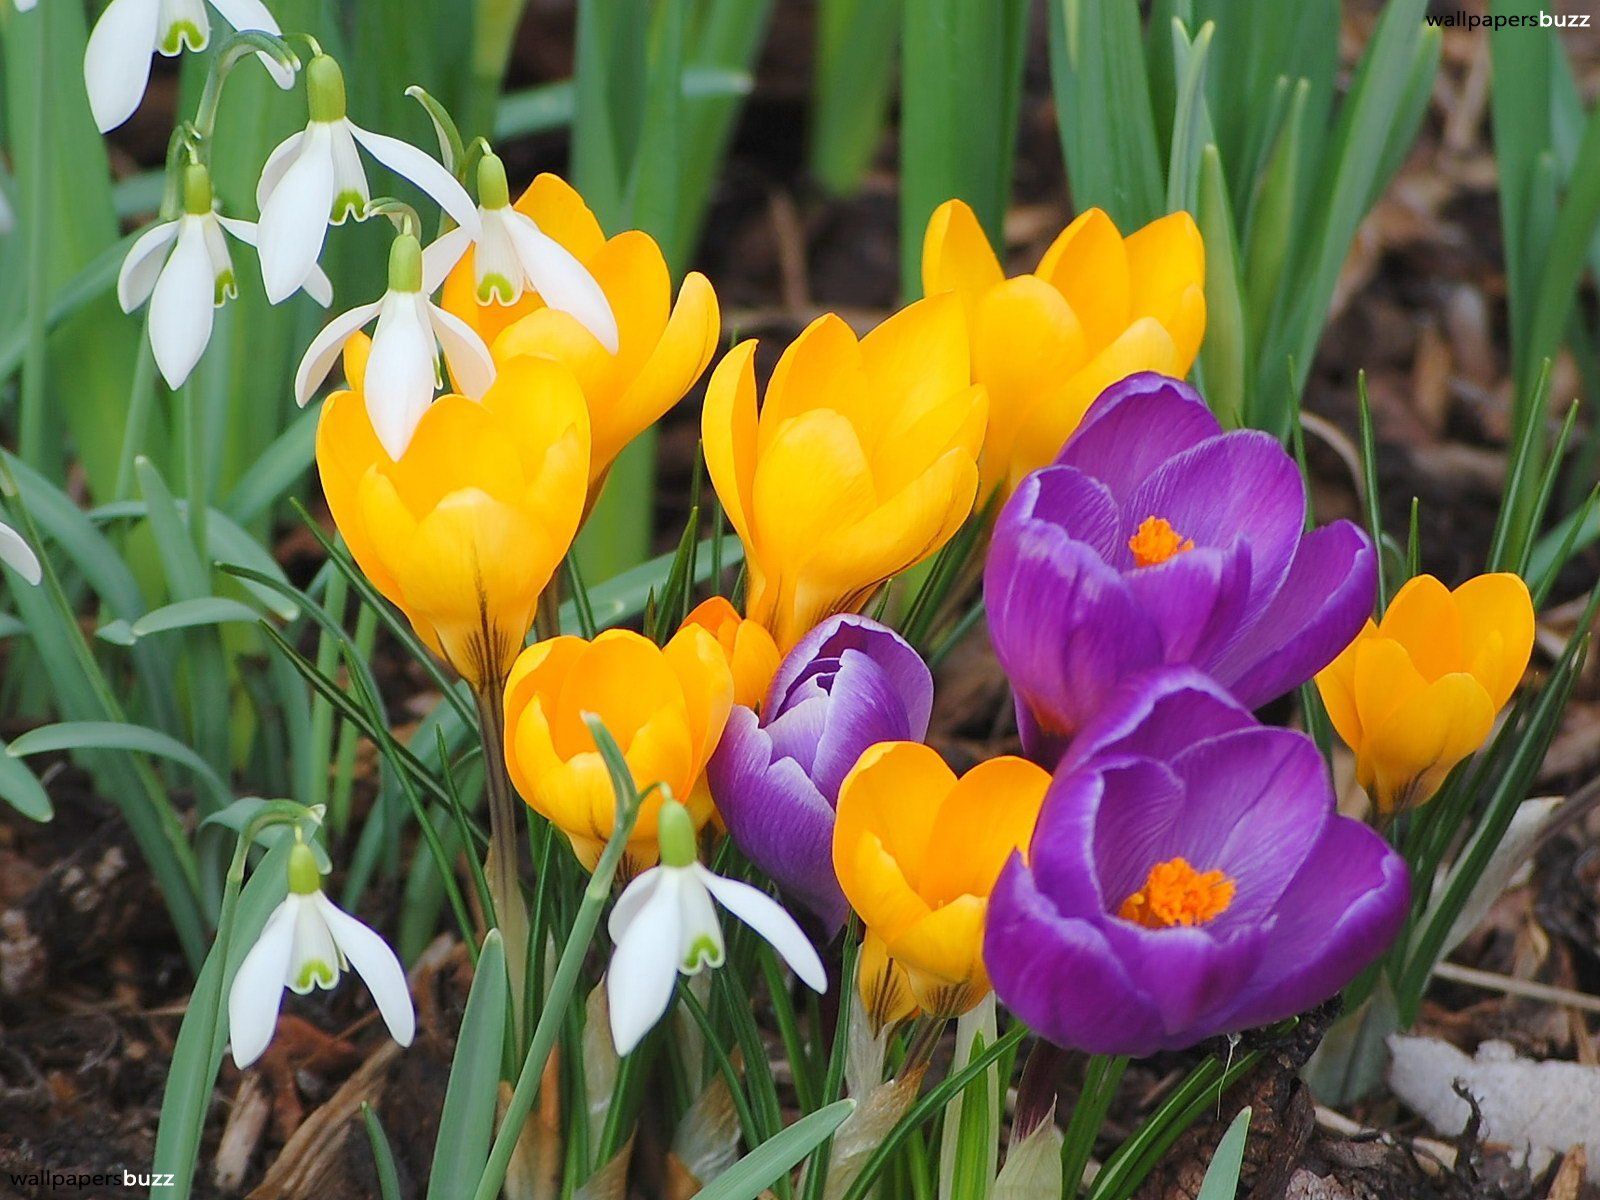 Very beautiful small spring flowers and purple crocus